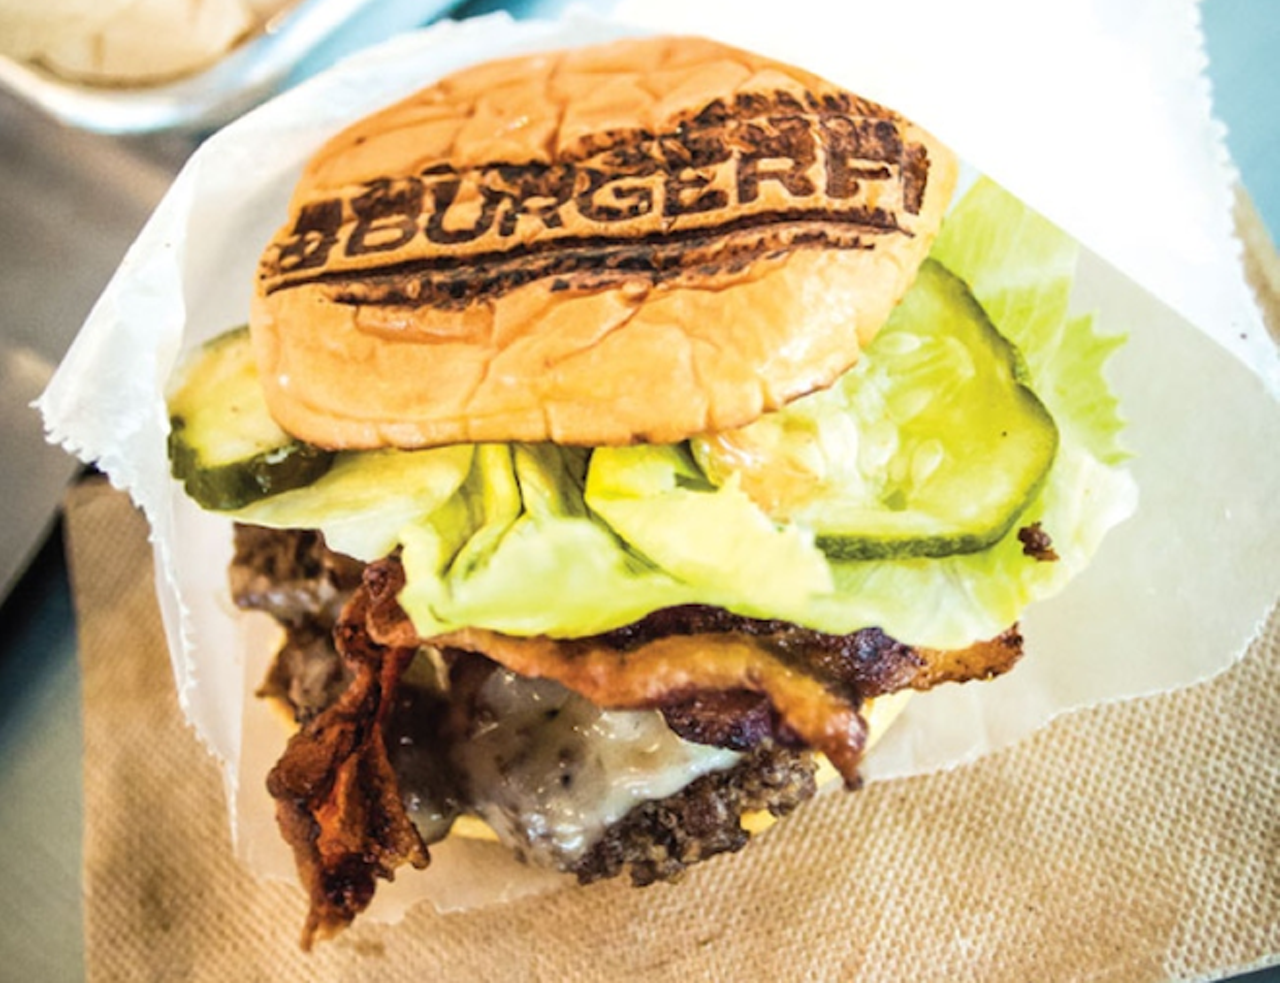 Best Burger: BurgerFi